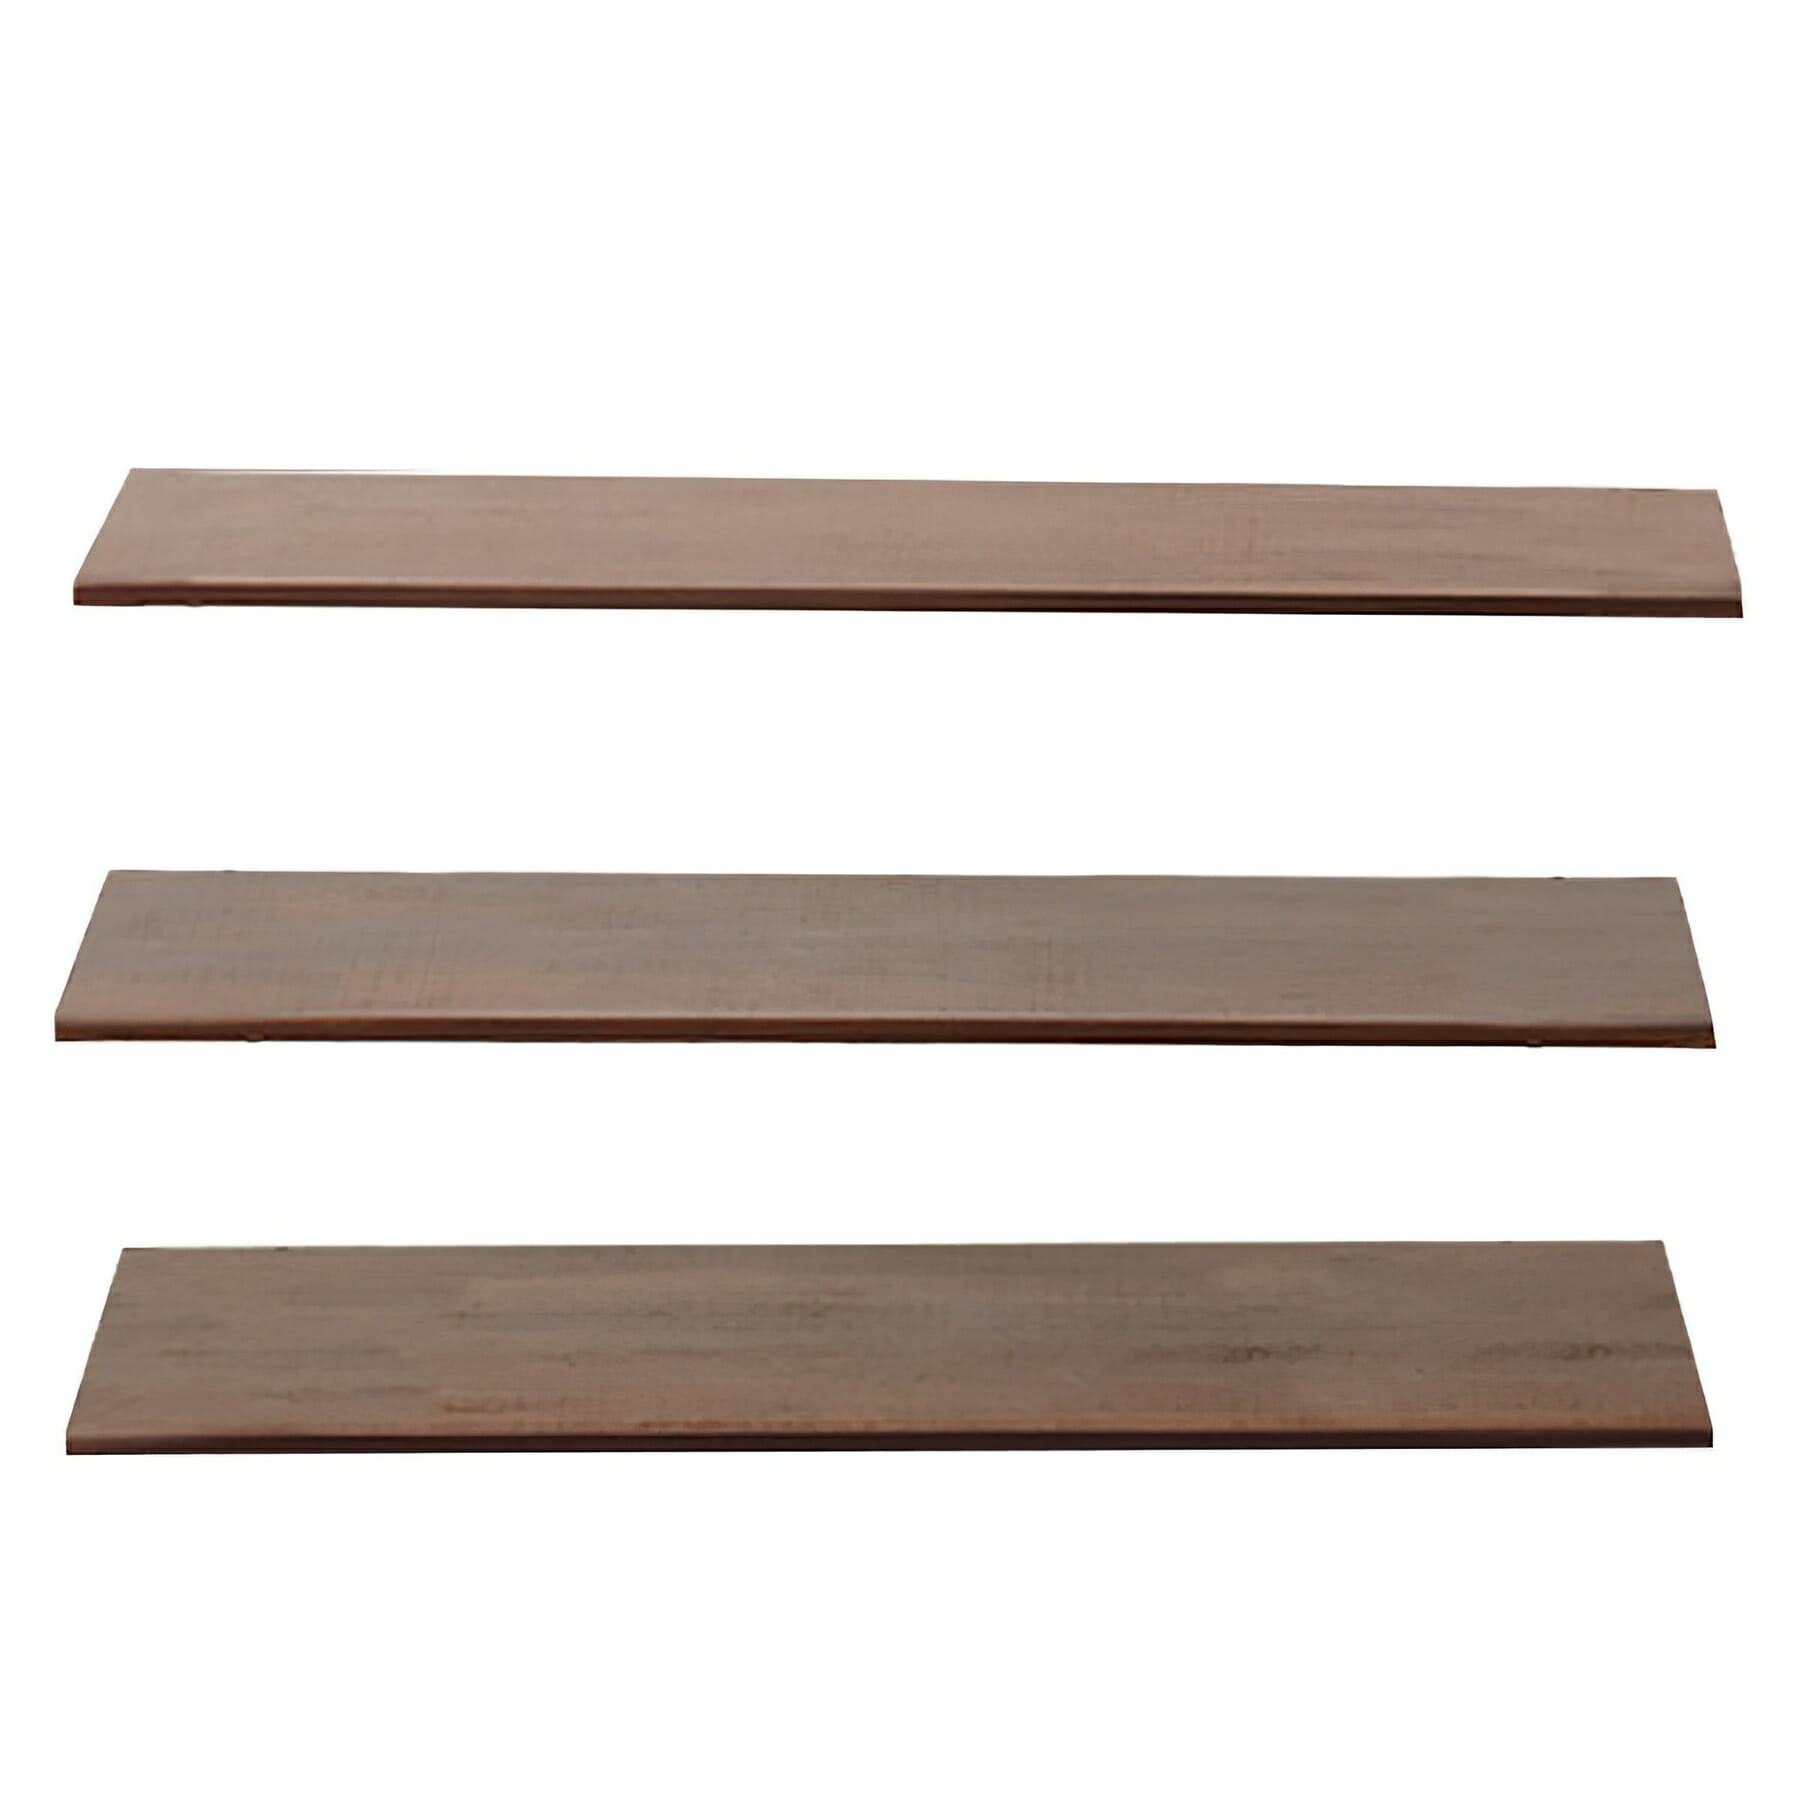 Set of 3 Wood Boards, 33.5" x 10", 33.5" x 12", 33.5" x 14"